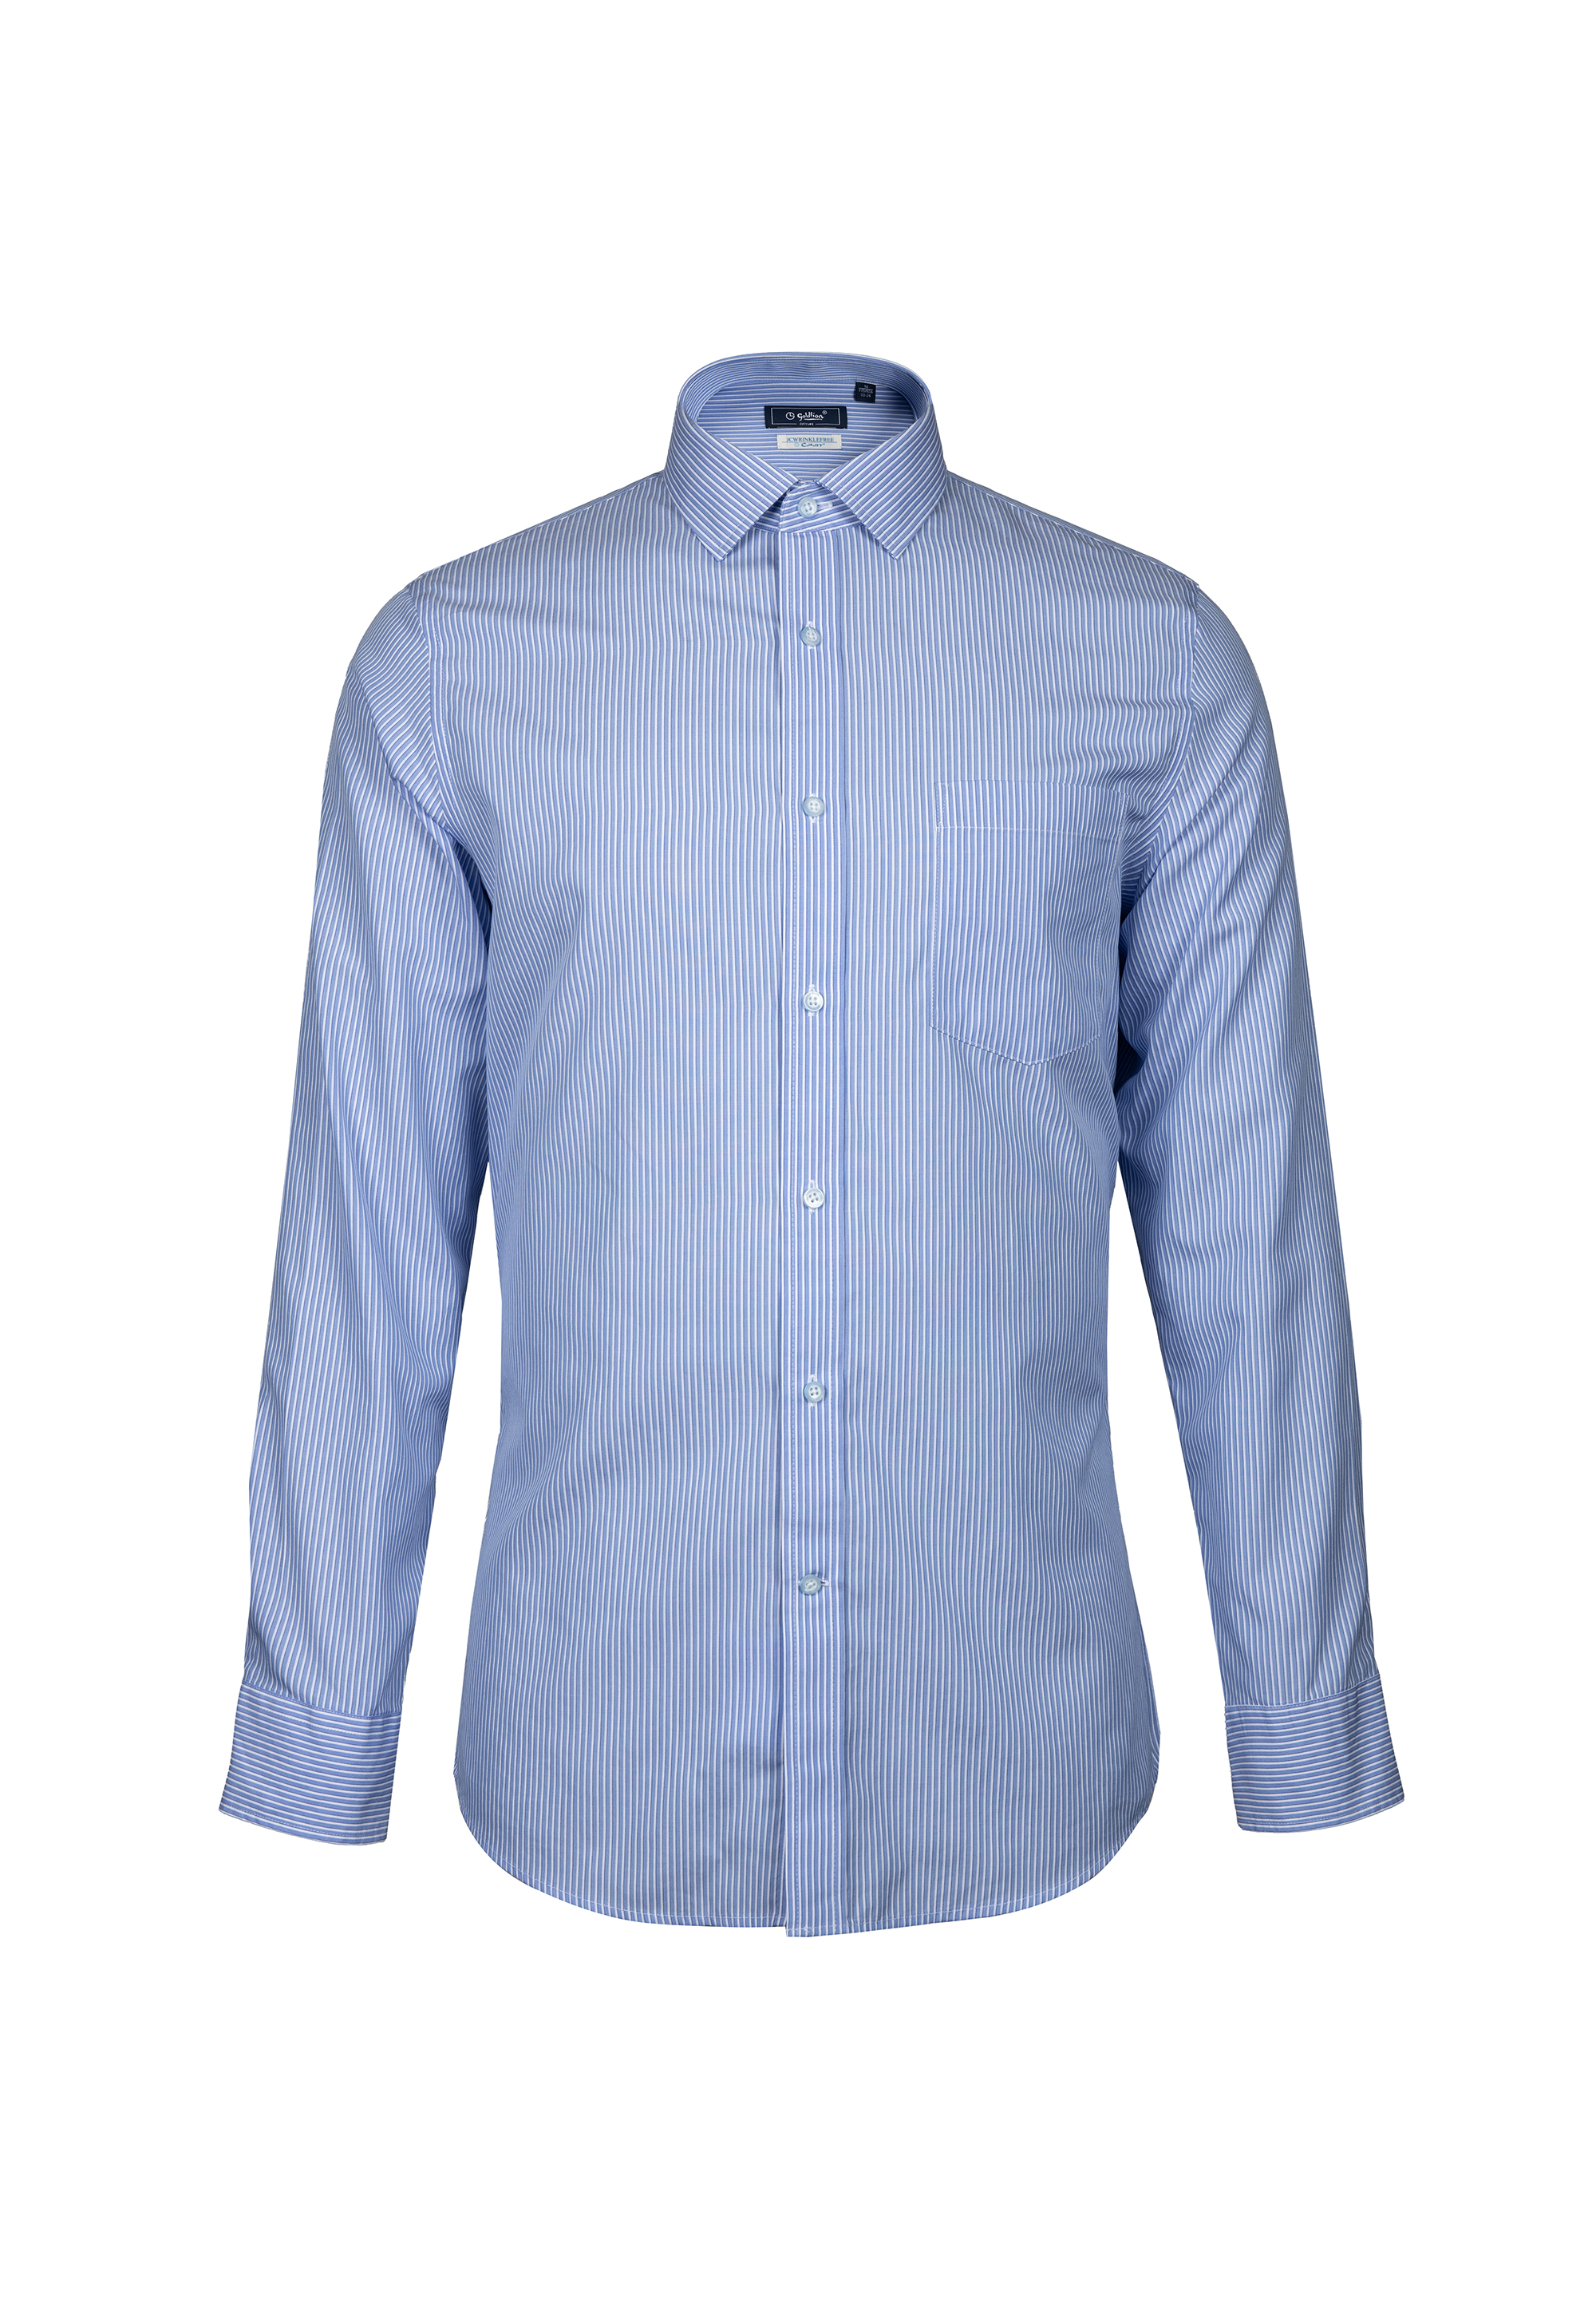 Goldlion Business Trim Fit Wrinkle-Free Long-Sleeved Shirt